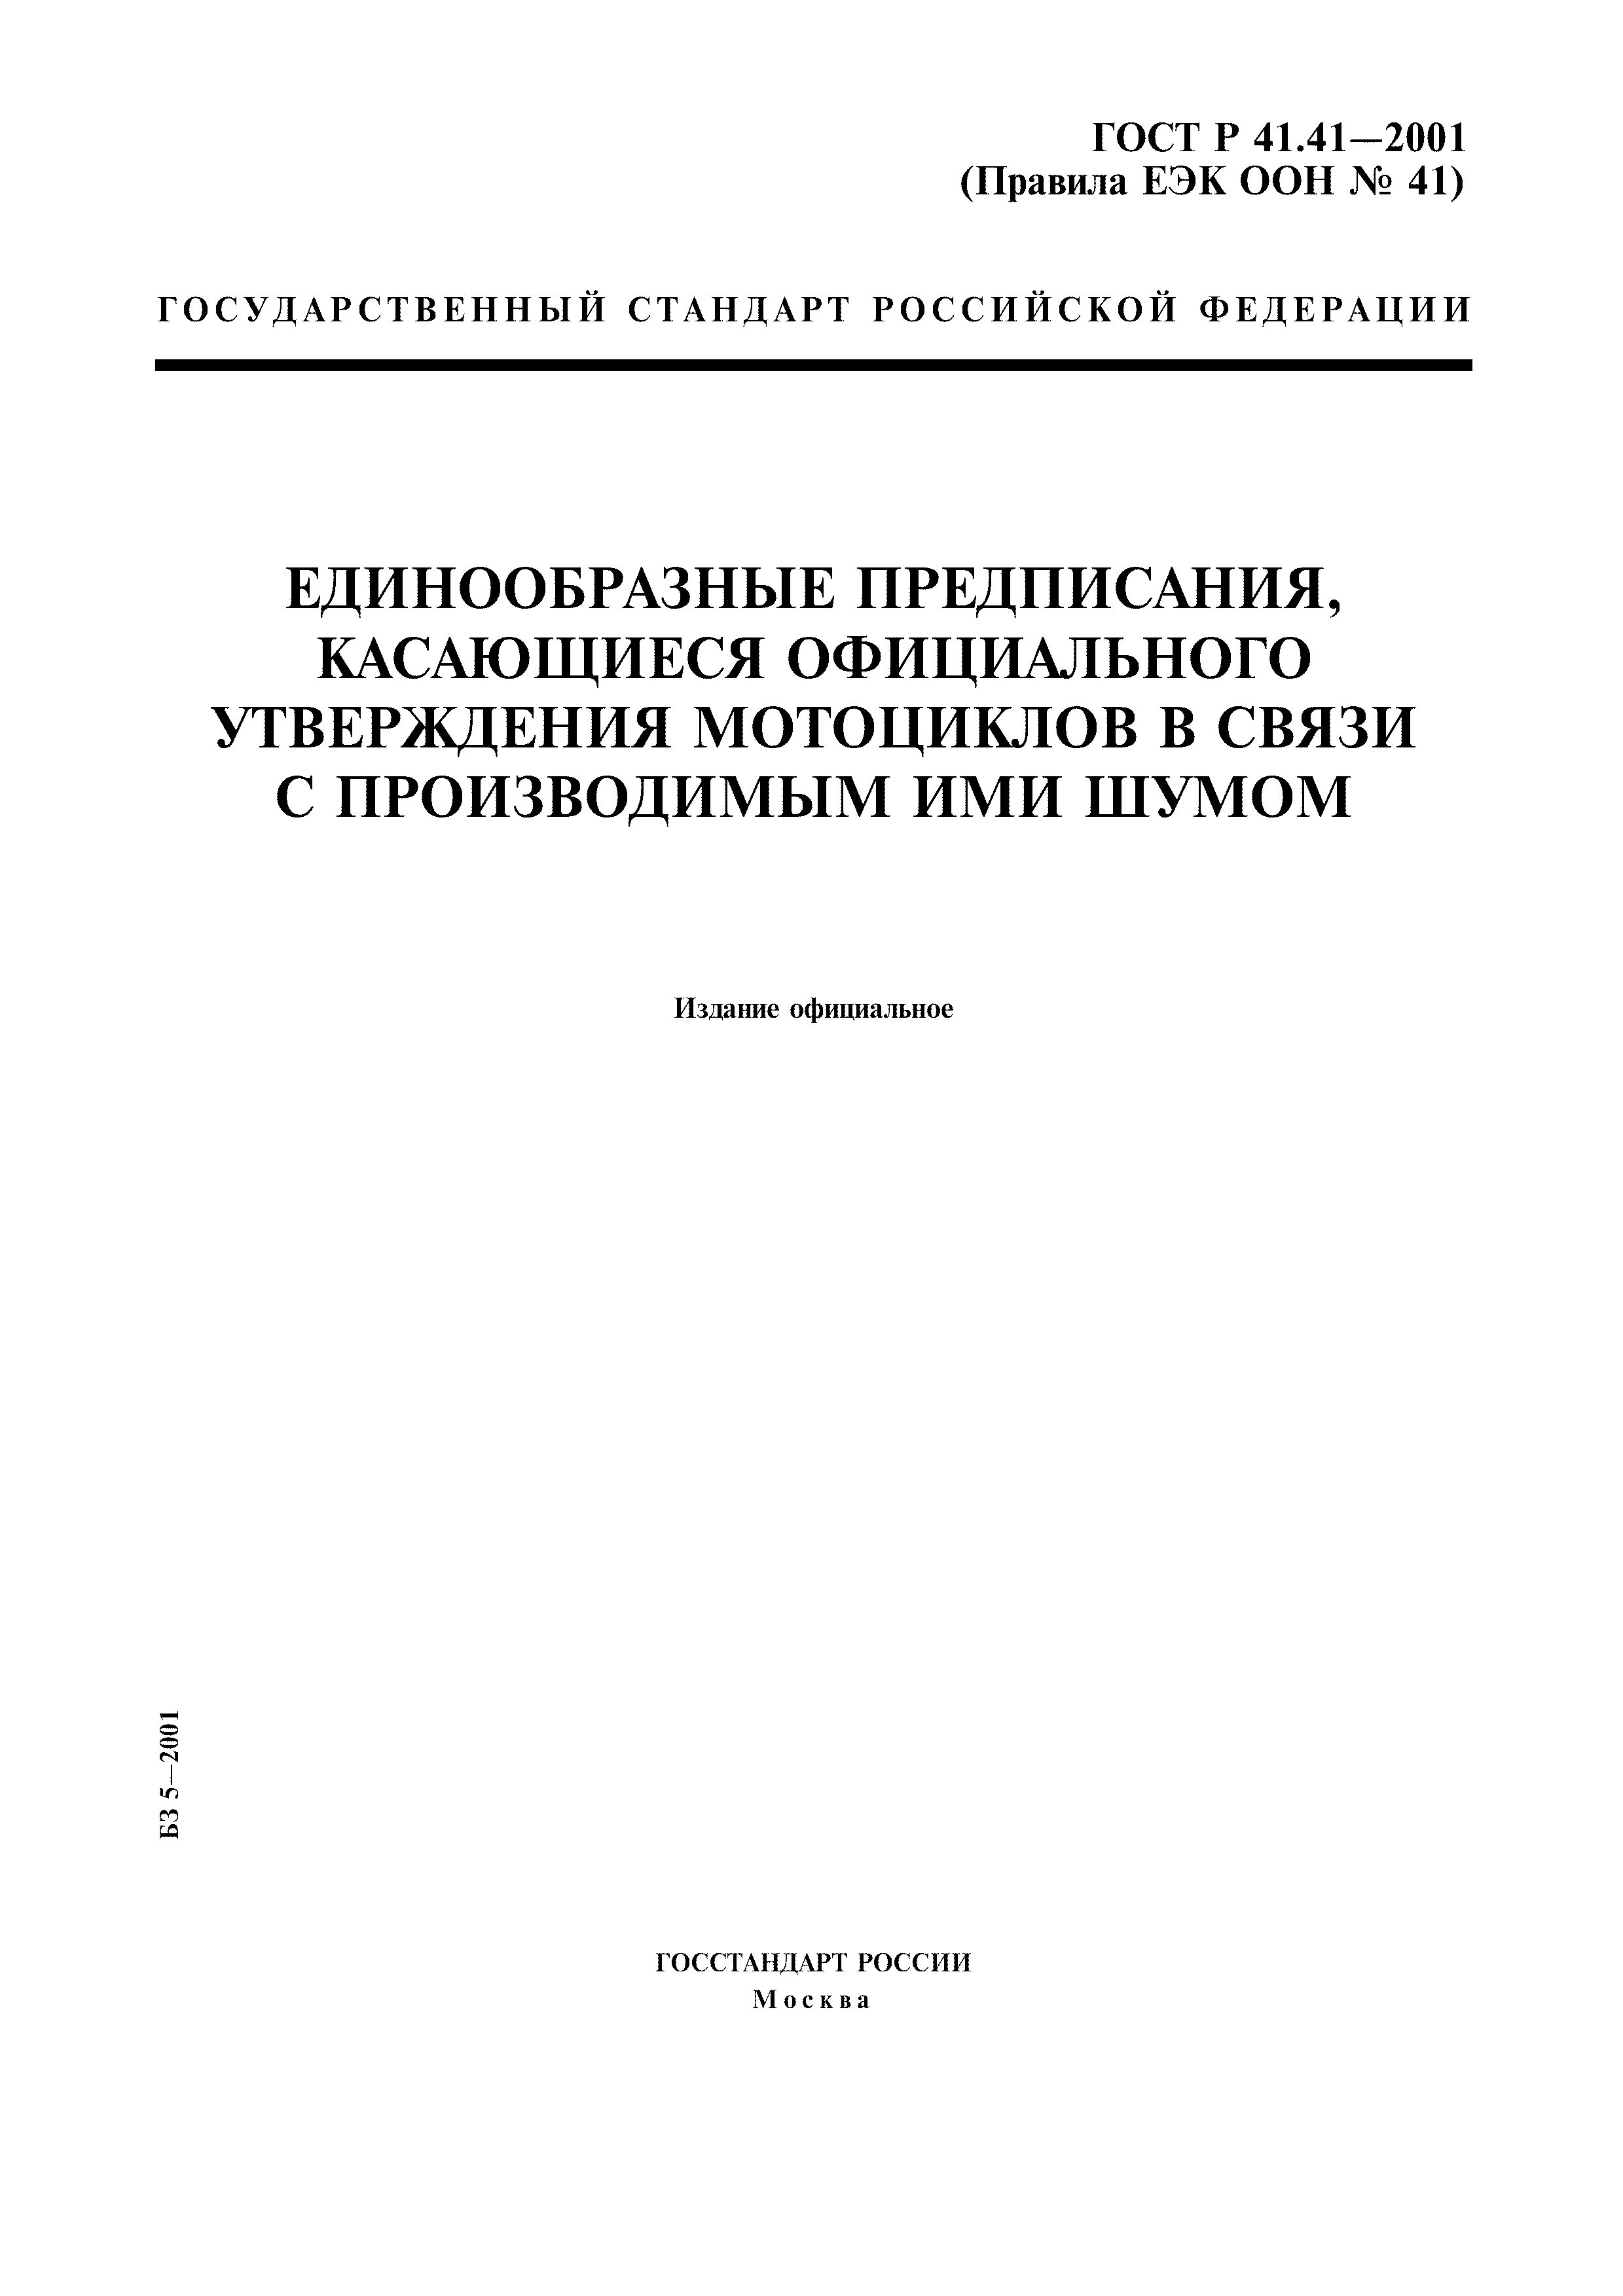 ГОСТ Р 41.41-2001